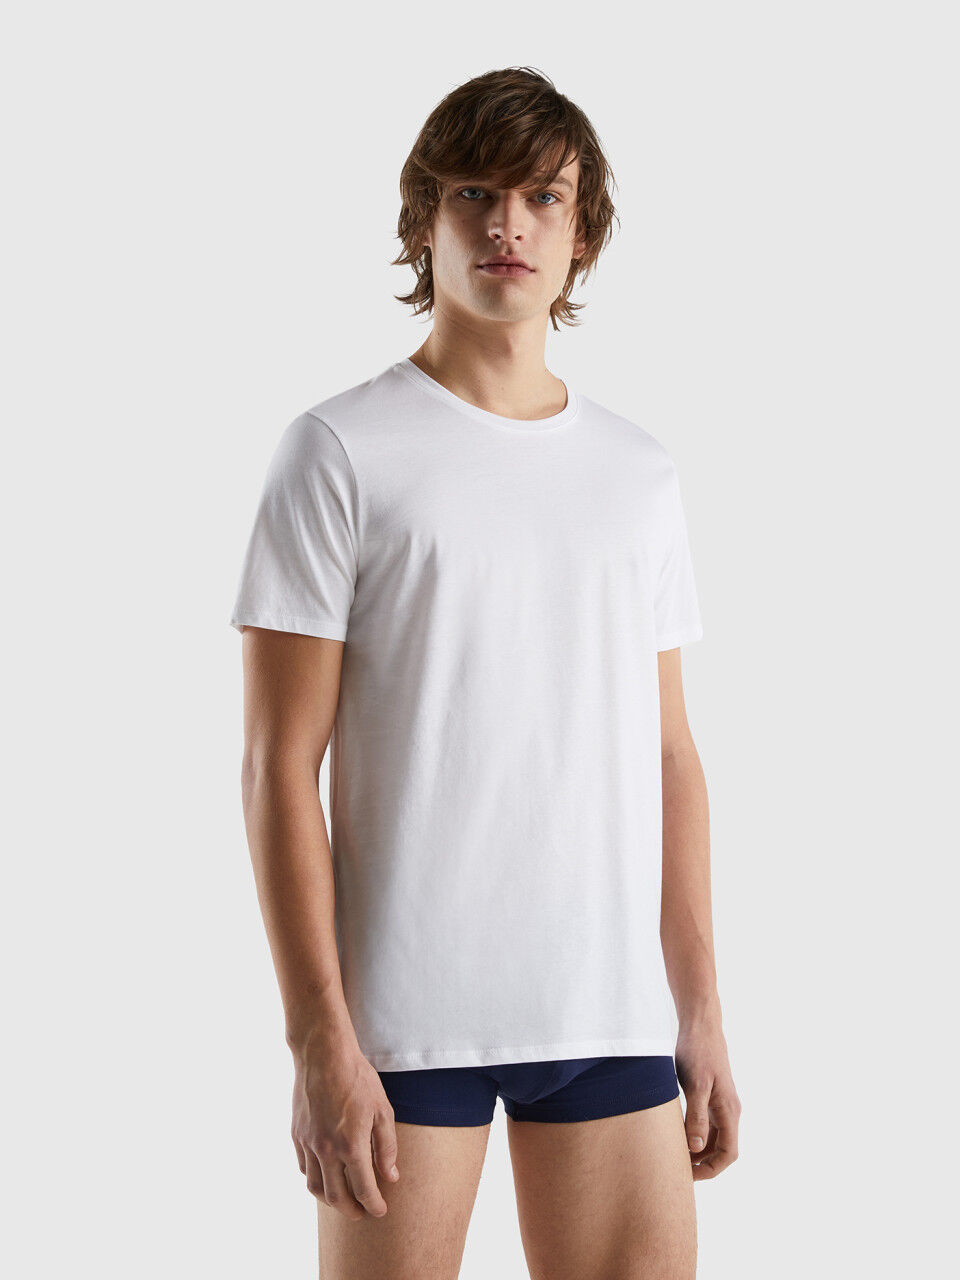 T-Shirt aus langfaseriger Baumwolle